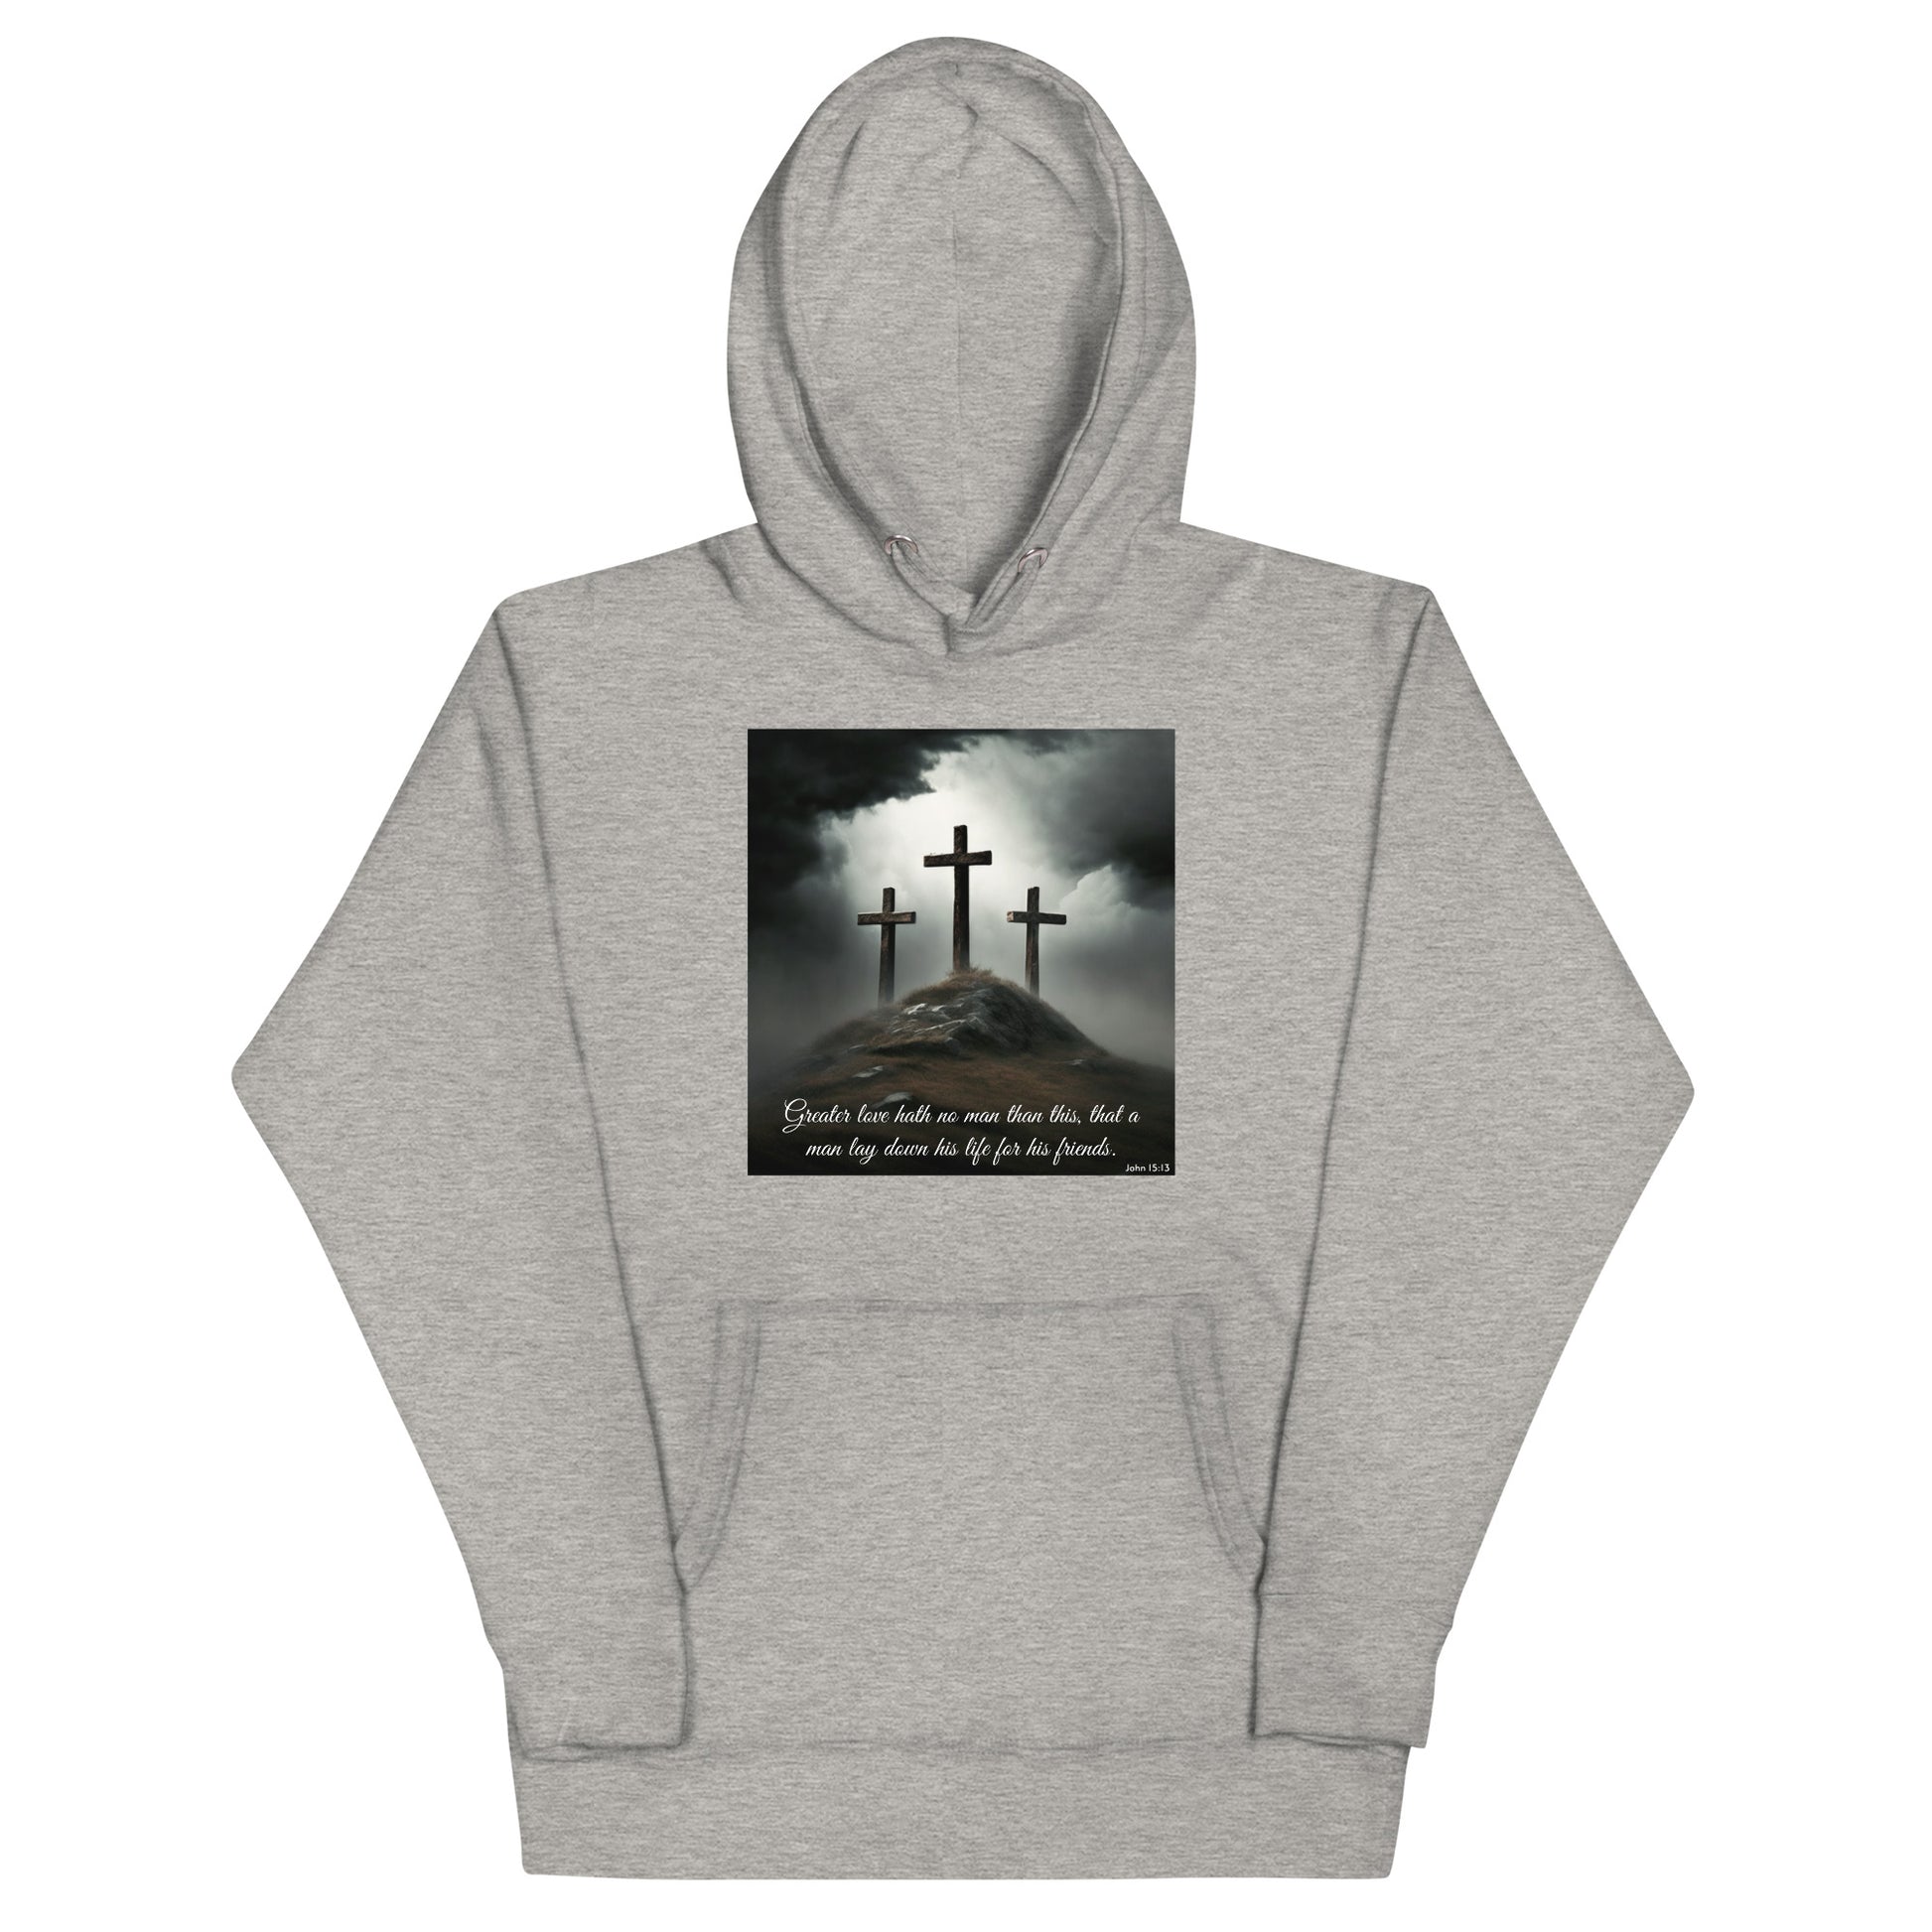 Three Crosses Crucifixion Men's Hooded Sweatshirt John 15:13 Carbon Grey